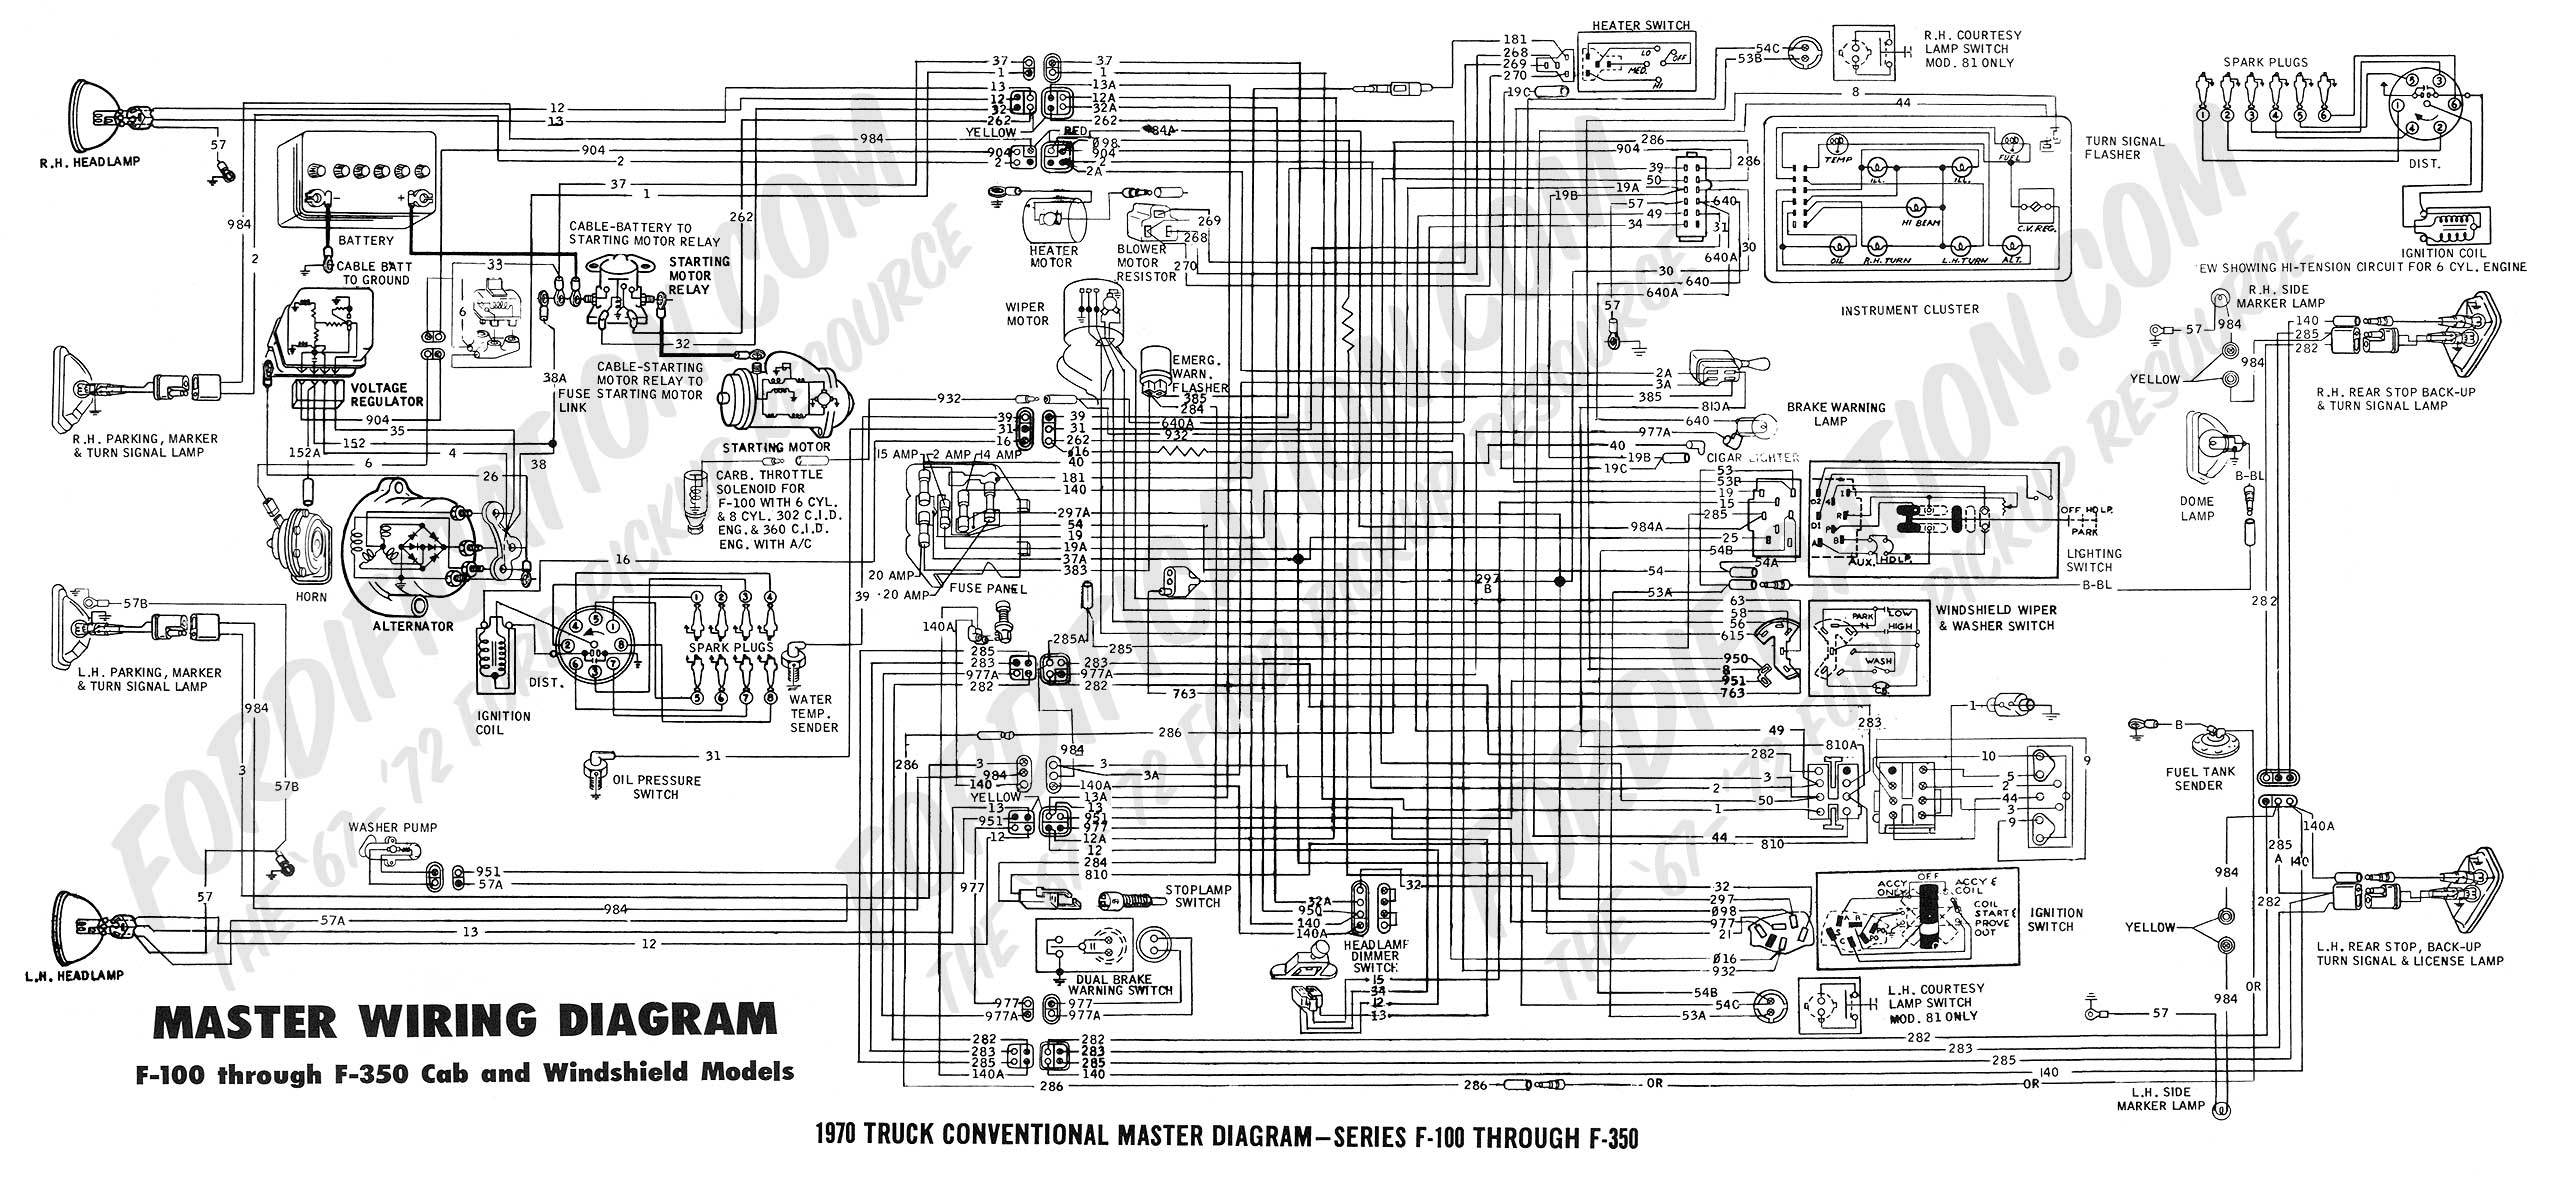 1970 Ford F 250 Wiring Diagram - Wiring Diagram Data Oreo - Ford F250 Wiring Diagram